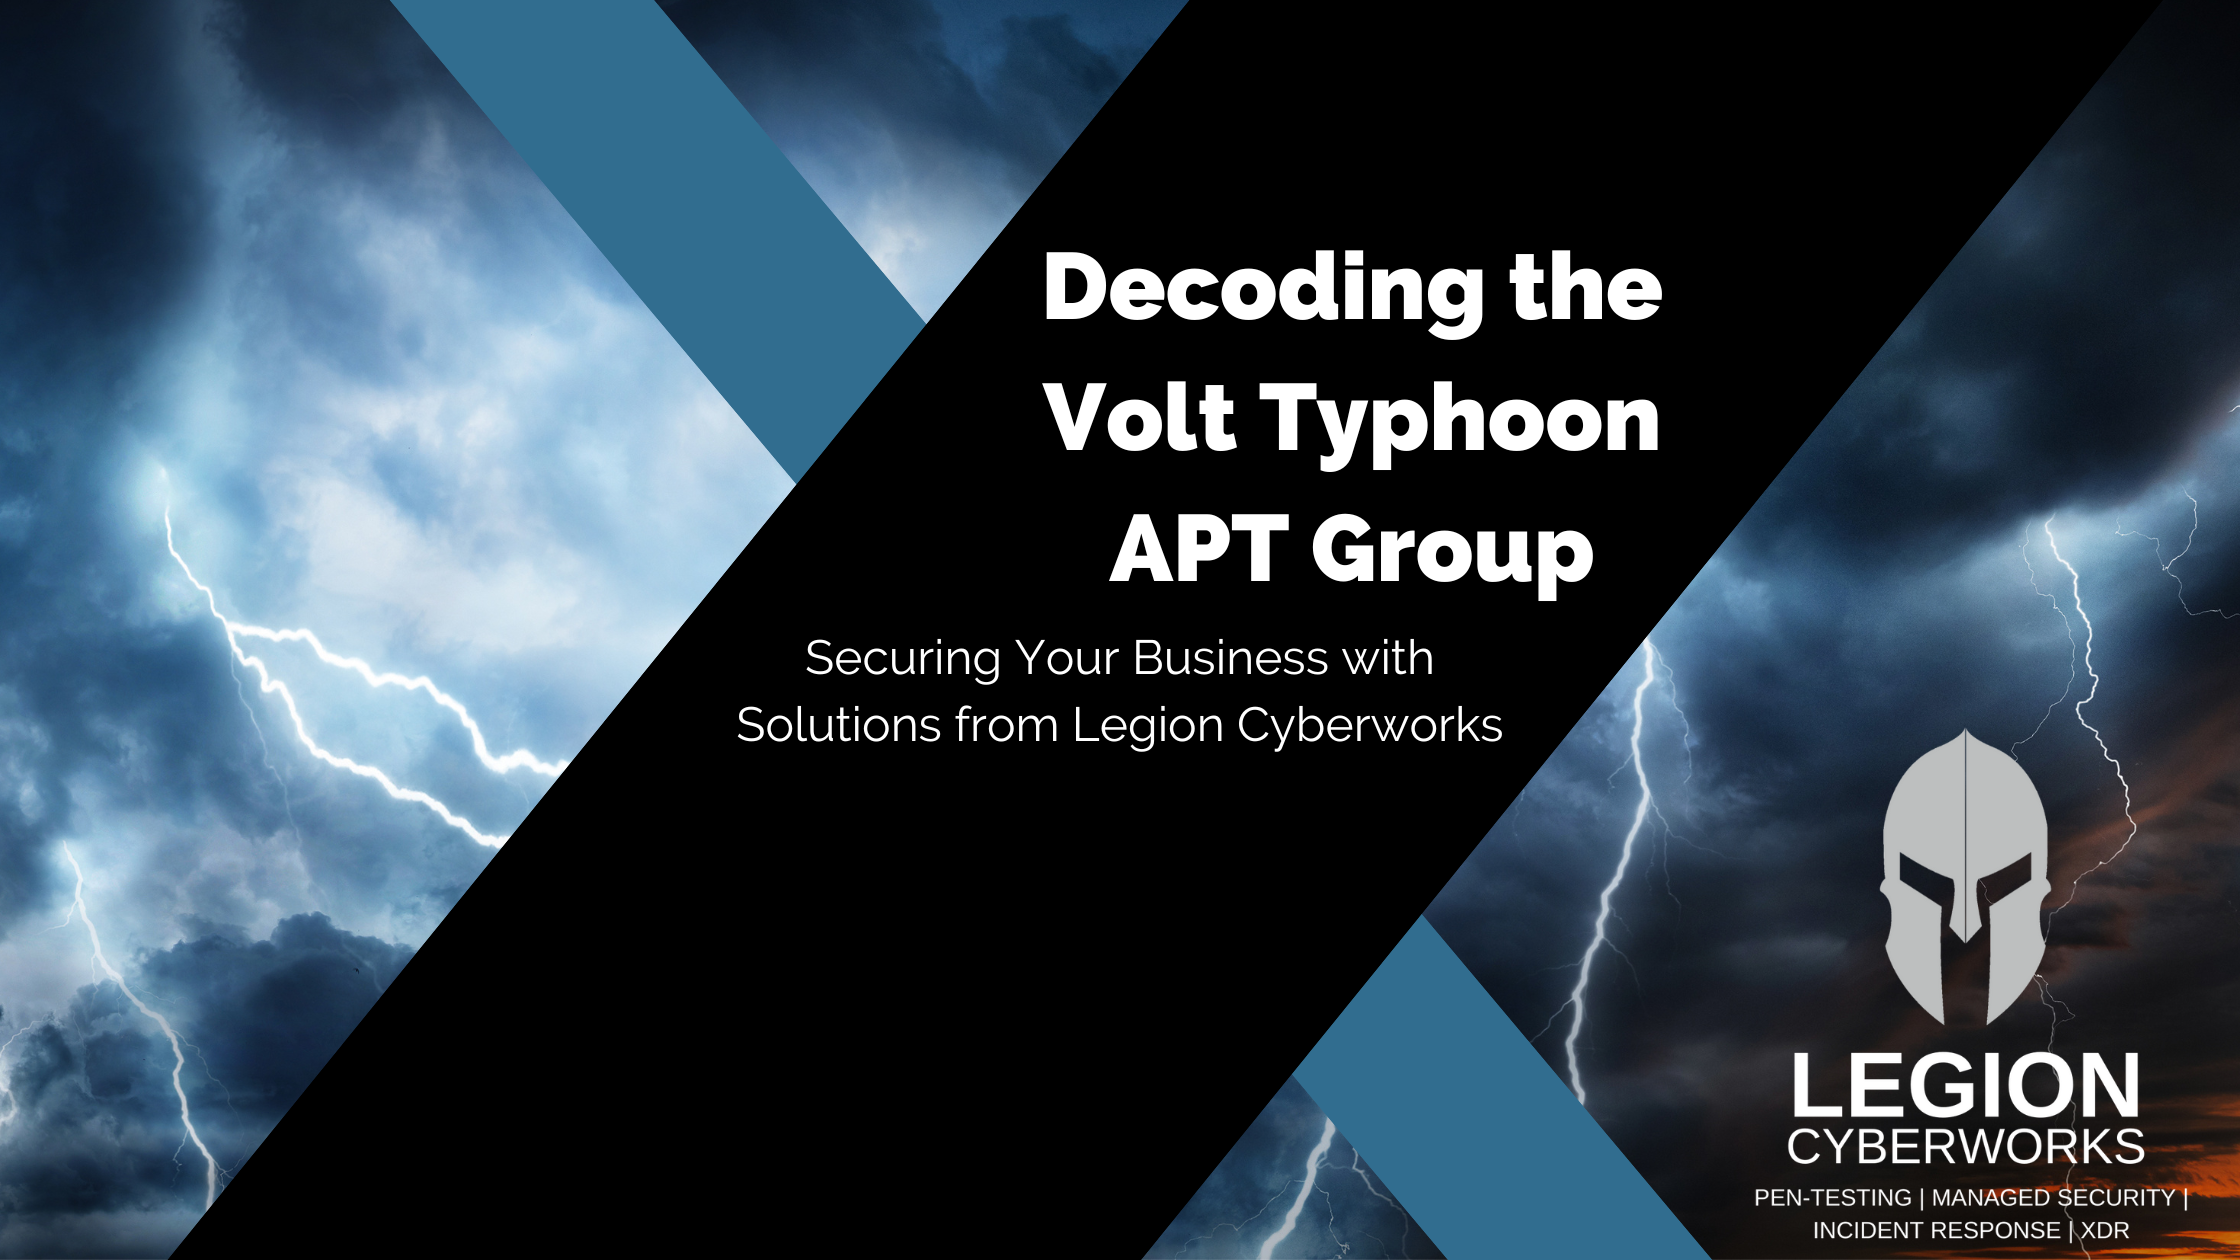 Decoding the Volt Typhoon APT Group